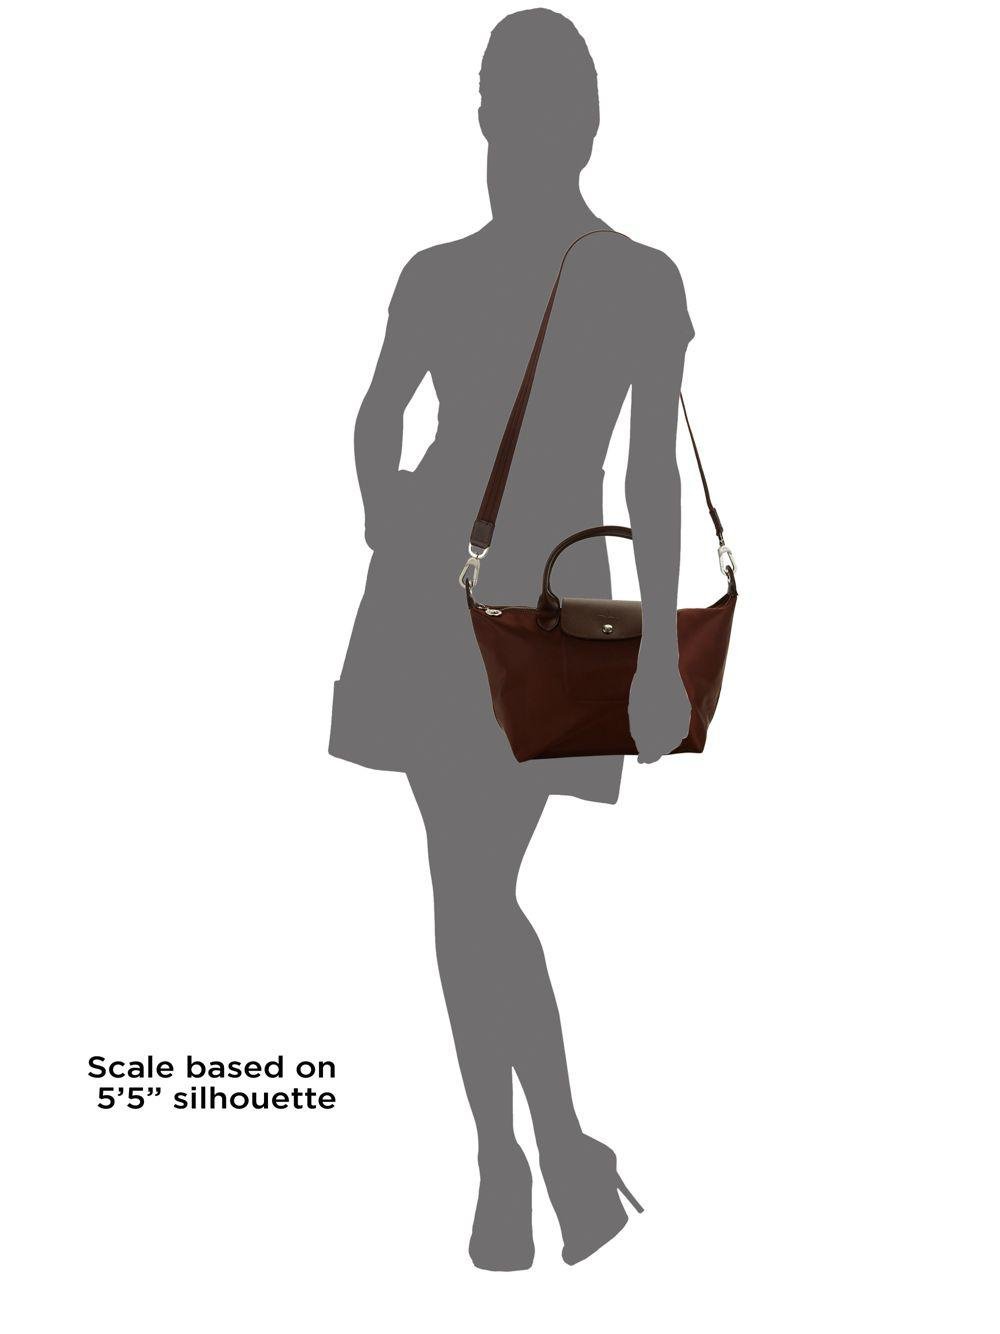 Longchamp Le Pliage Neo Tote Shoulder Bag in Brown